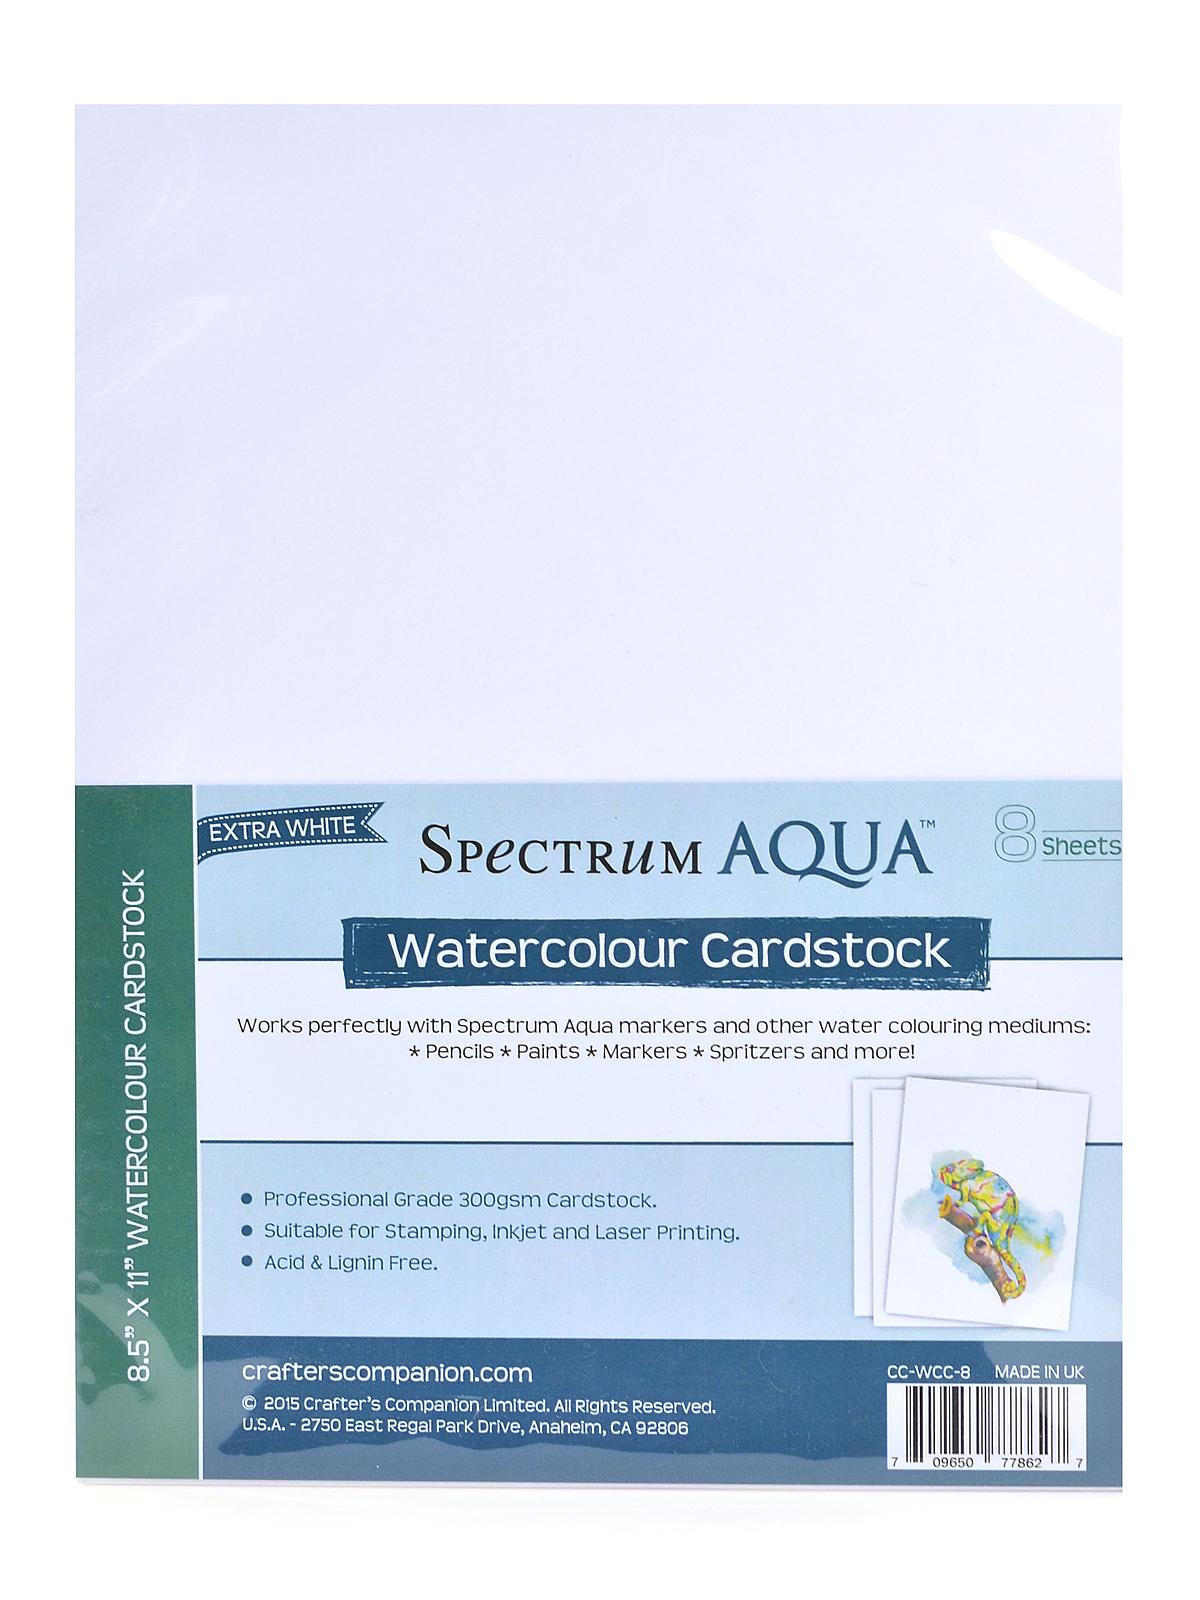 Cardstock Watercolor 8 1 2 In. X 11 In. Pack Of 8